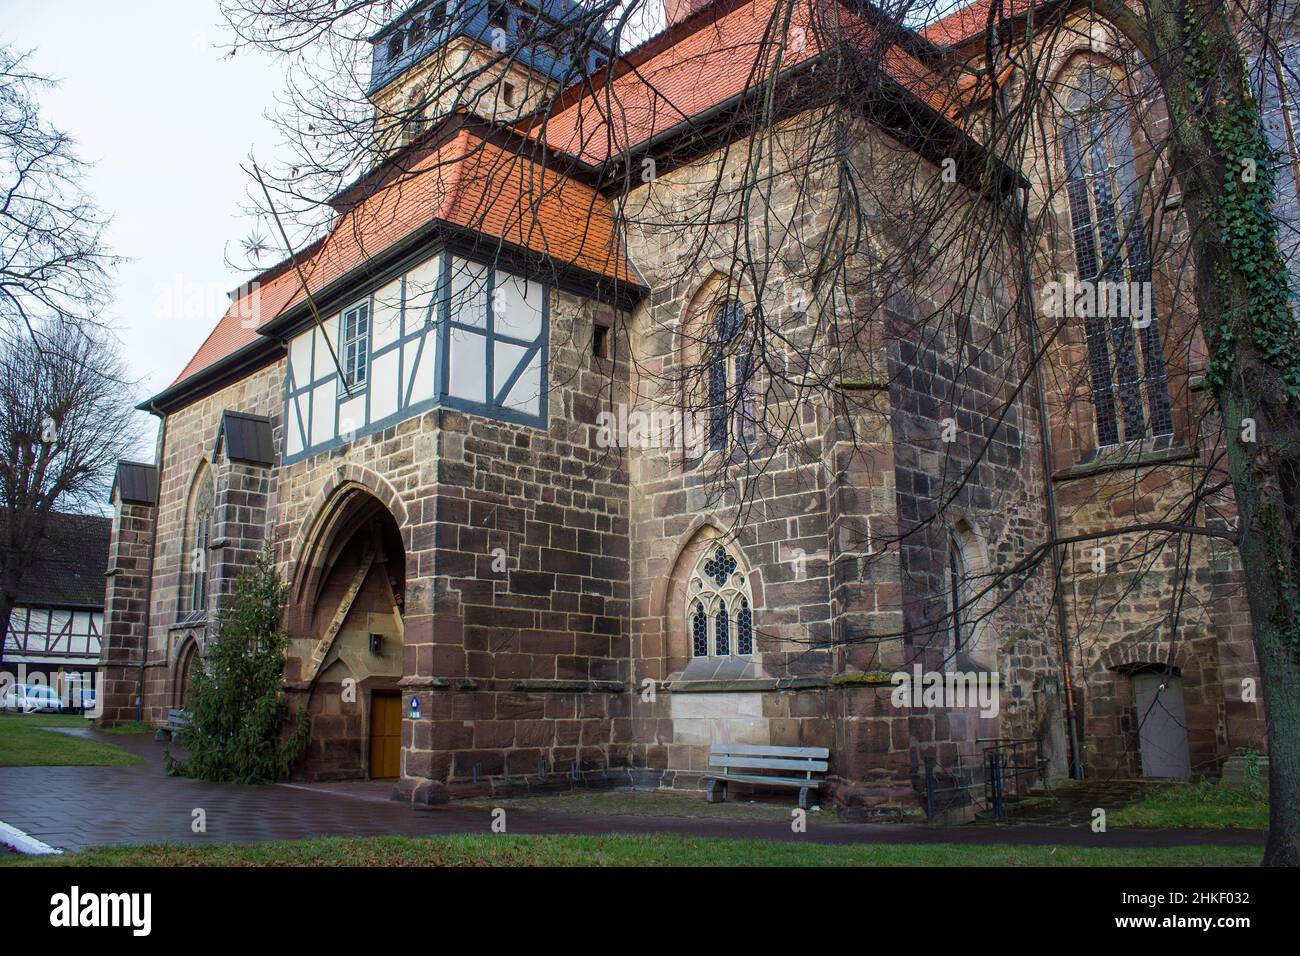 Church in Witzenhausen in the Werra Valley in Germany, Hessen Stock Photo